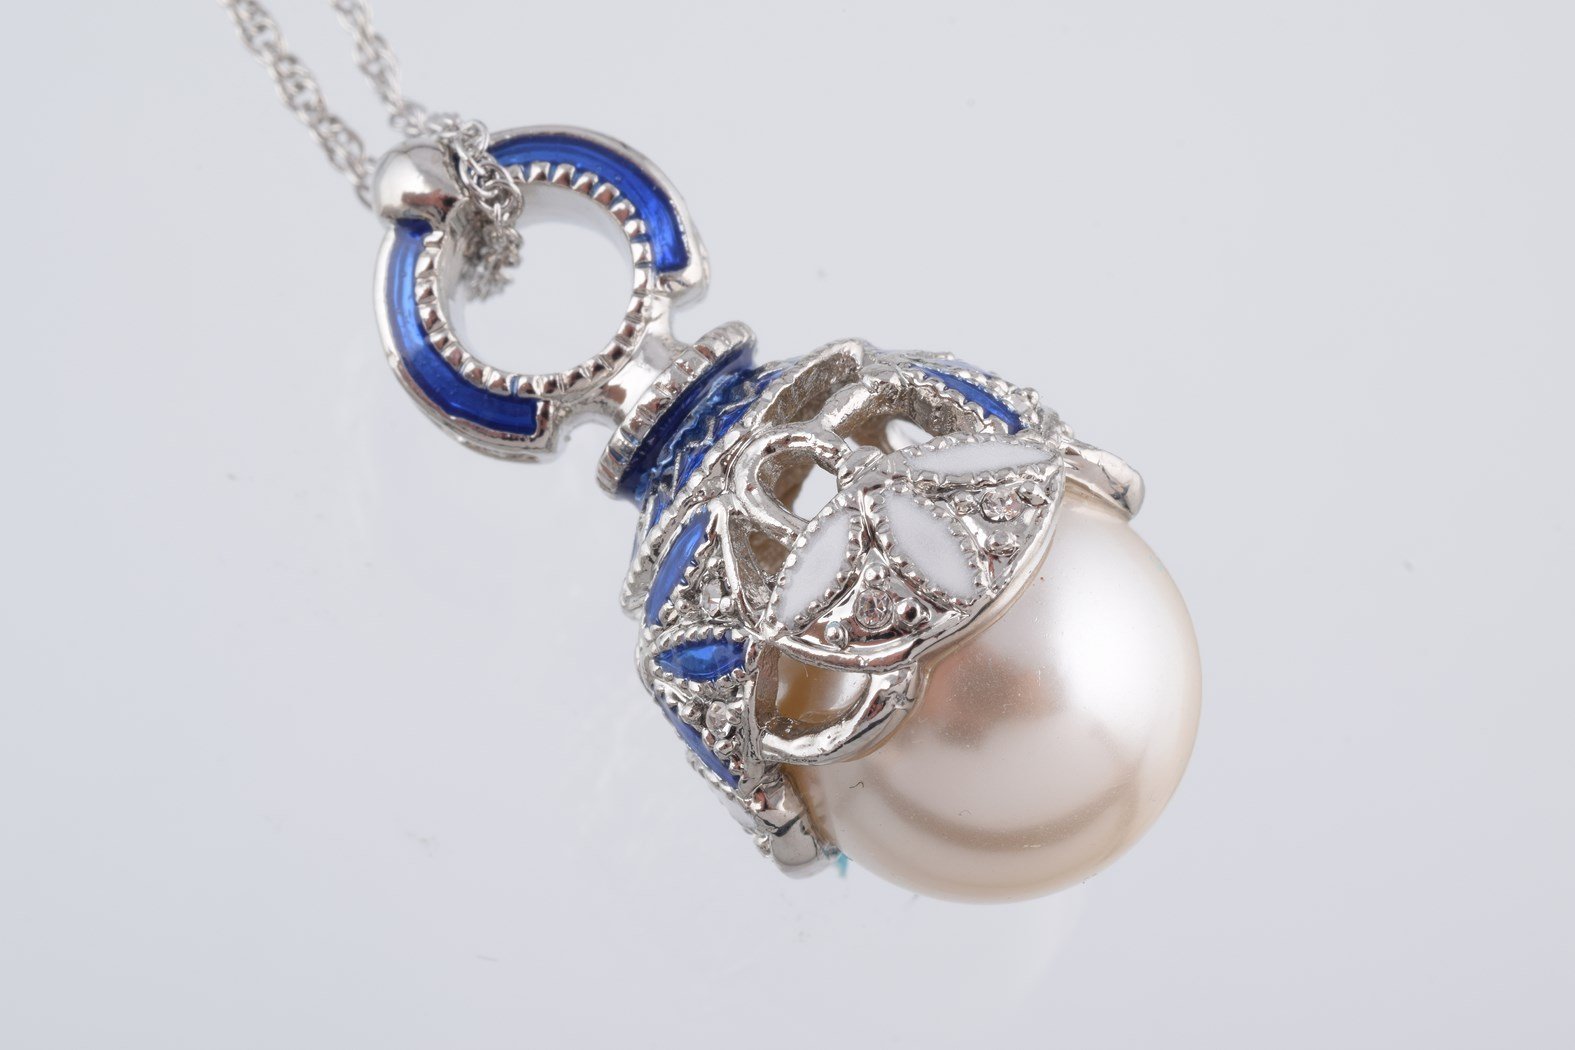 Keren Kopal Silver & Blue Pearl Egg Pendant Necklace  39.00